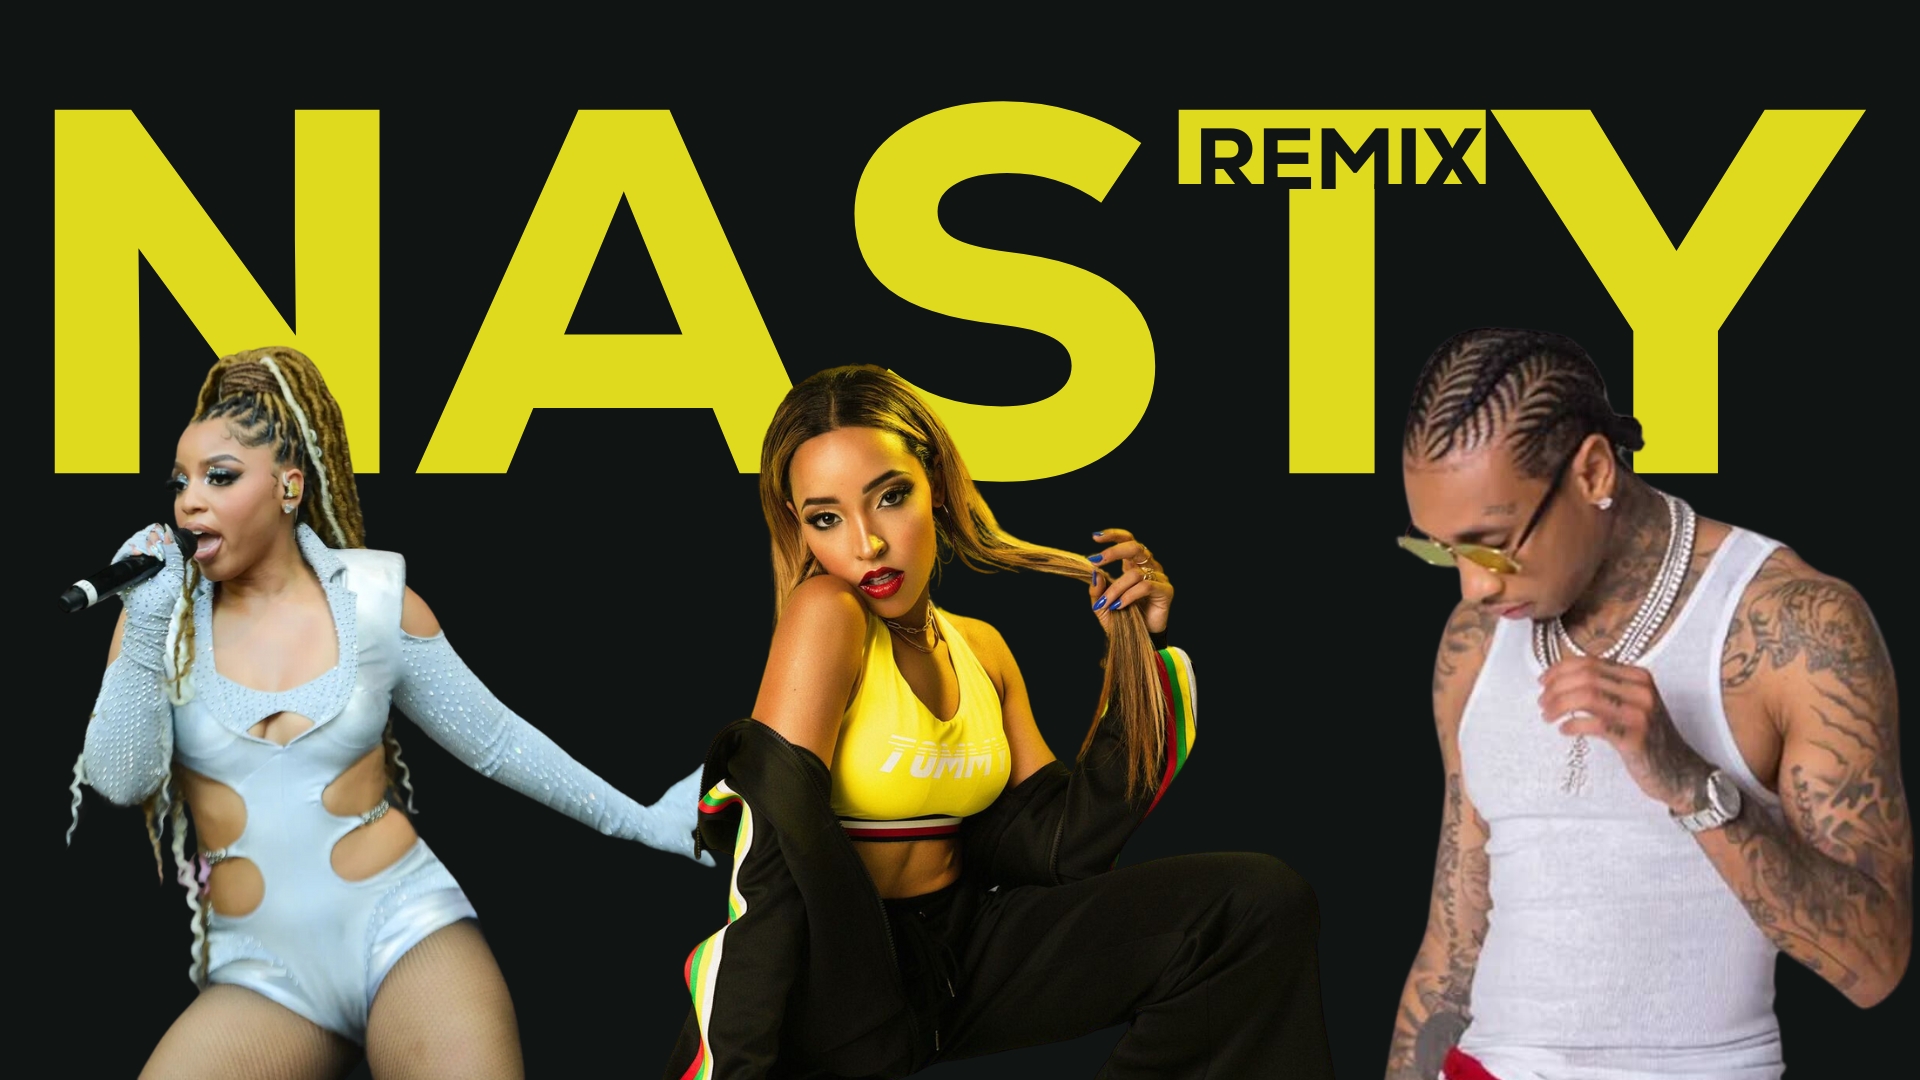 Tinashe Releases New ‘Nasty’ Remixes feat. Tyga & Chloe: Listen #Tinashe